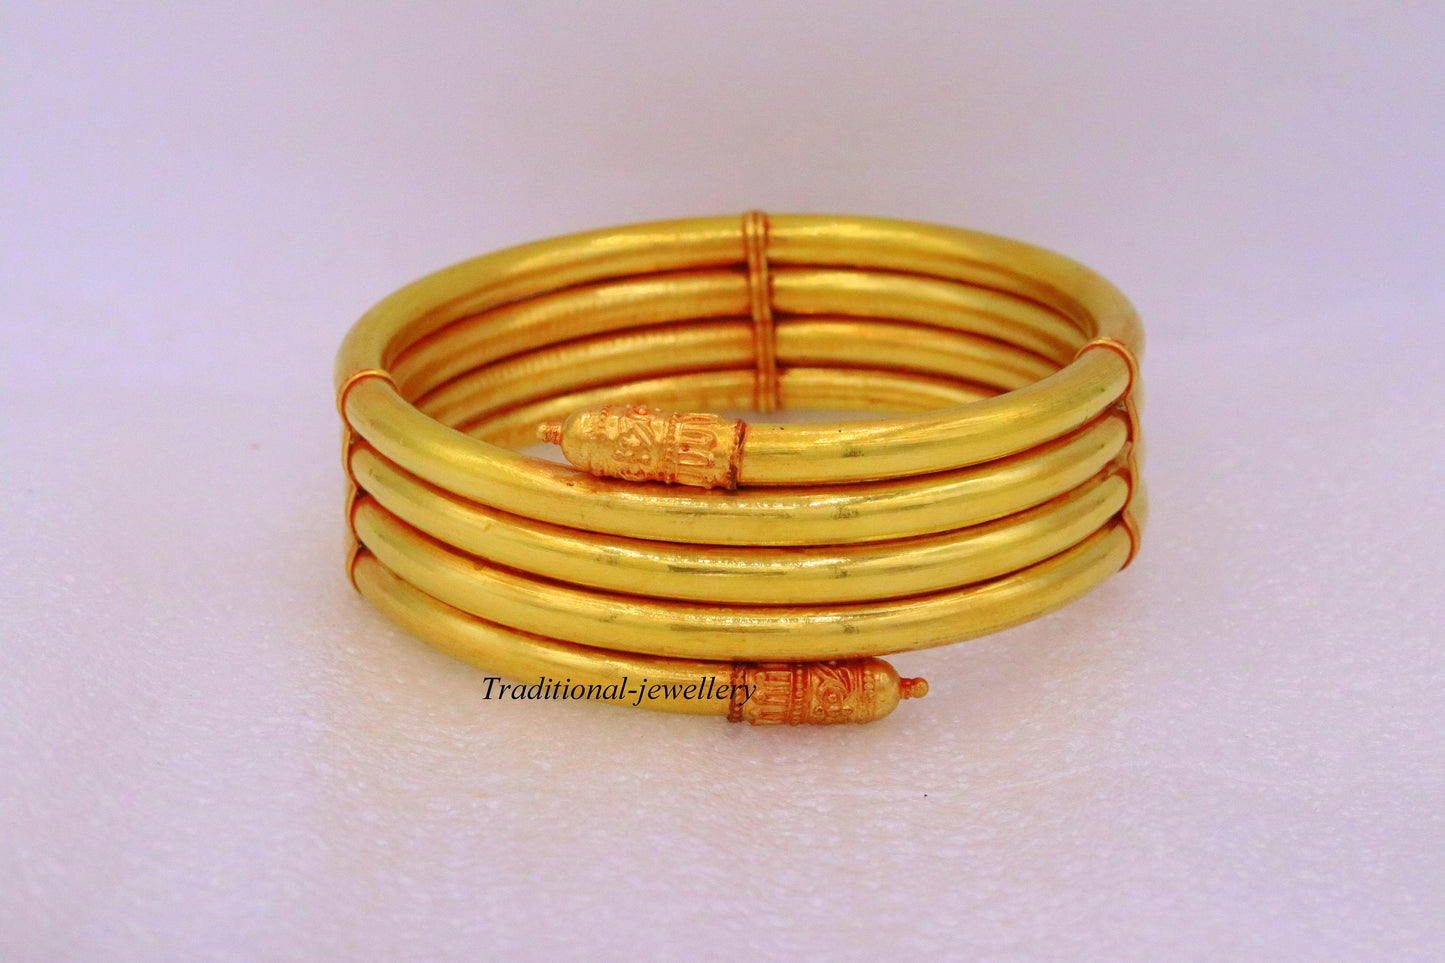 22 karat yellow gold handmade fabulous armlet indian tribal Arm bangle bracelet antique design women's jewelry ba137 - TRIBAL ORNAMENTS